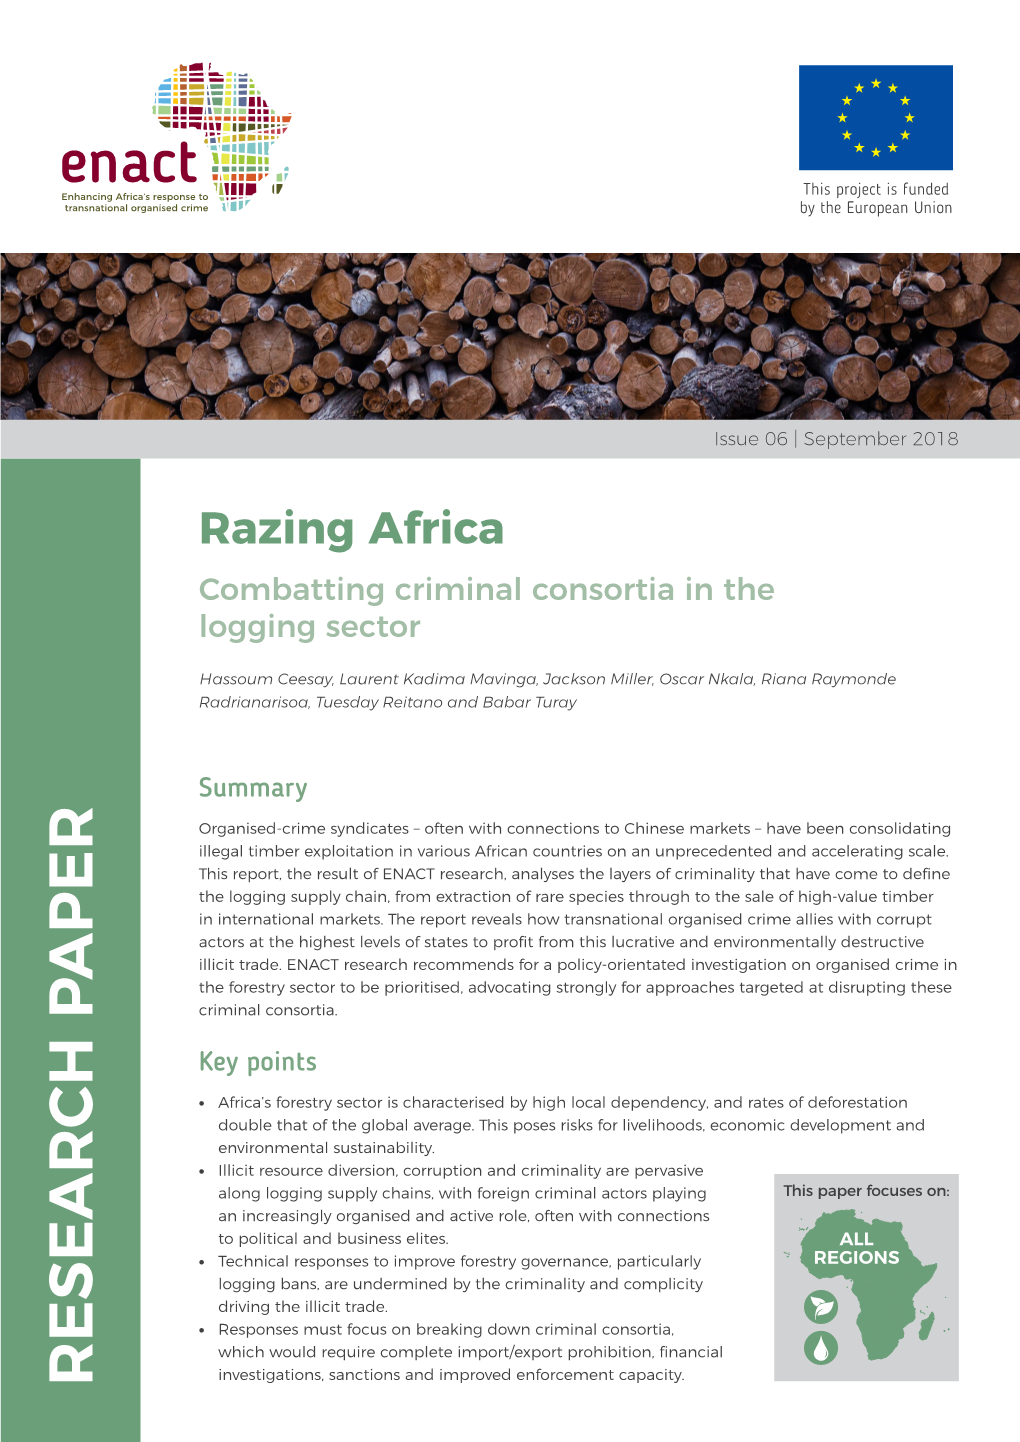 Razing Africa Combatting Criminal Consortia in the Logging Sector